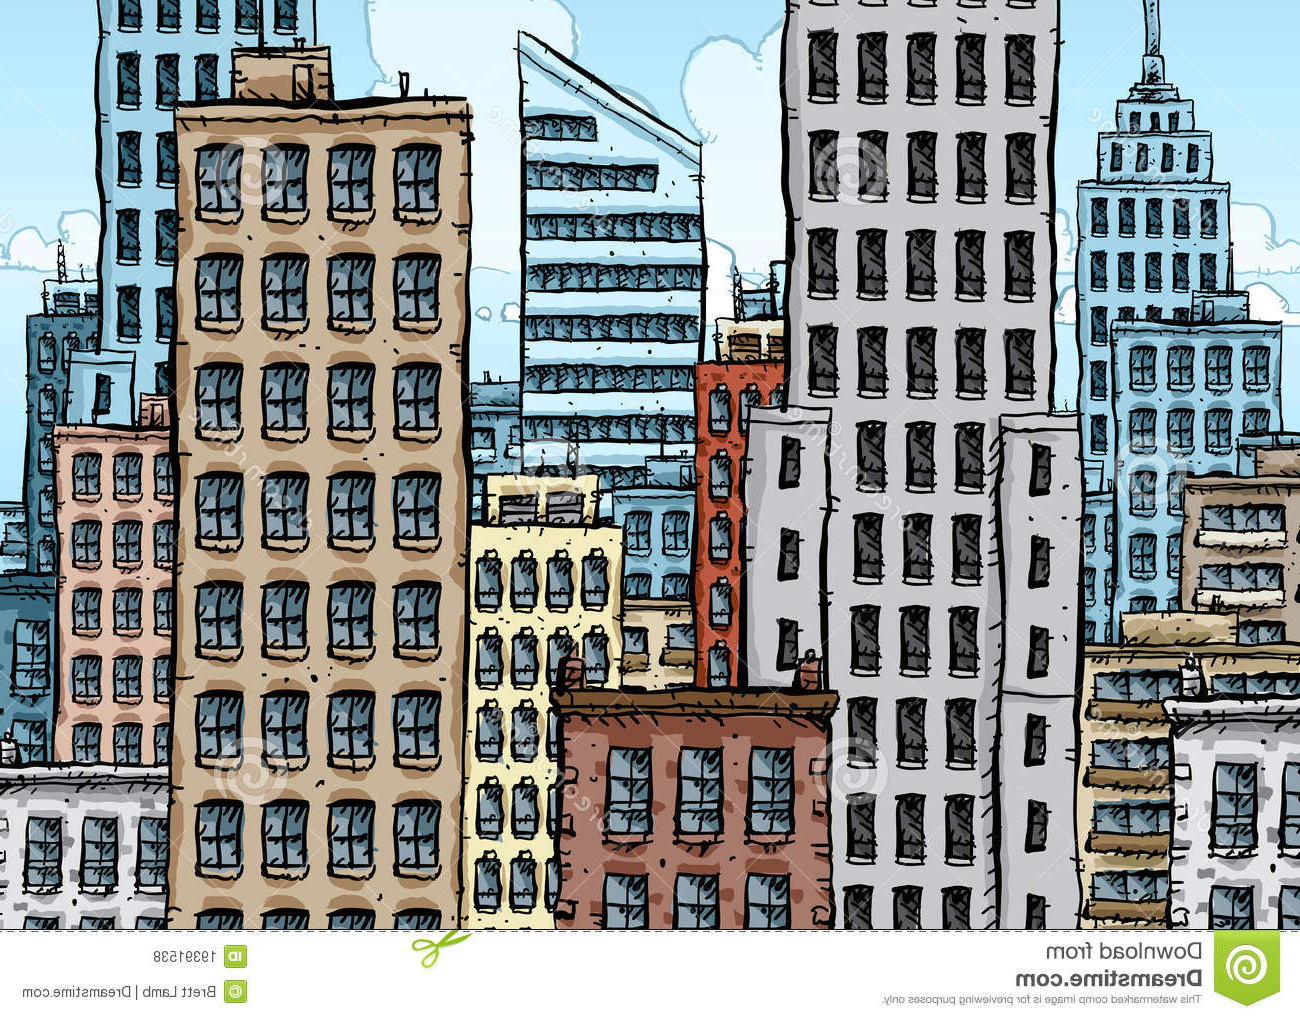 photos libres de droits grande ville de dessin animé image